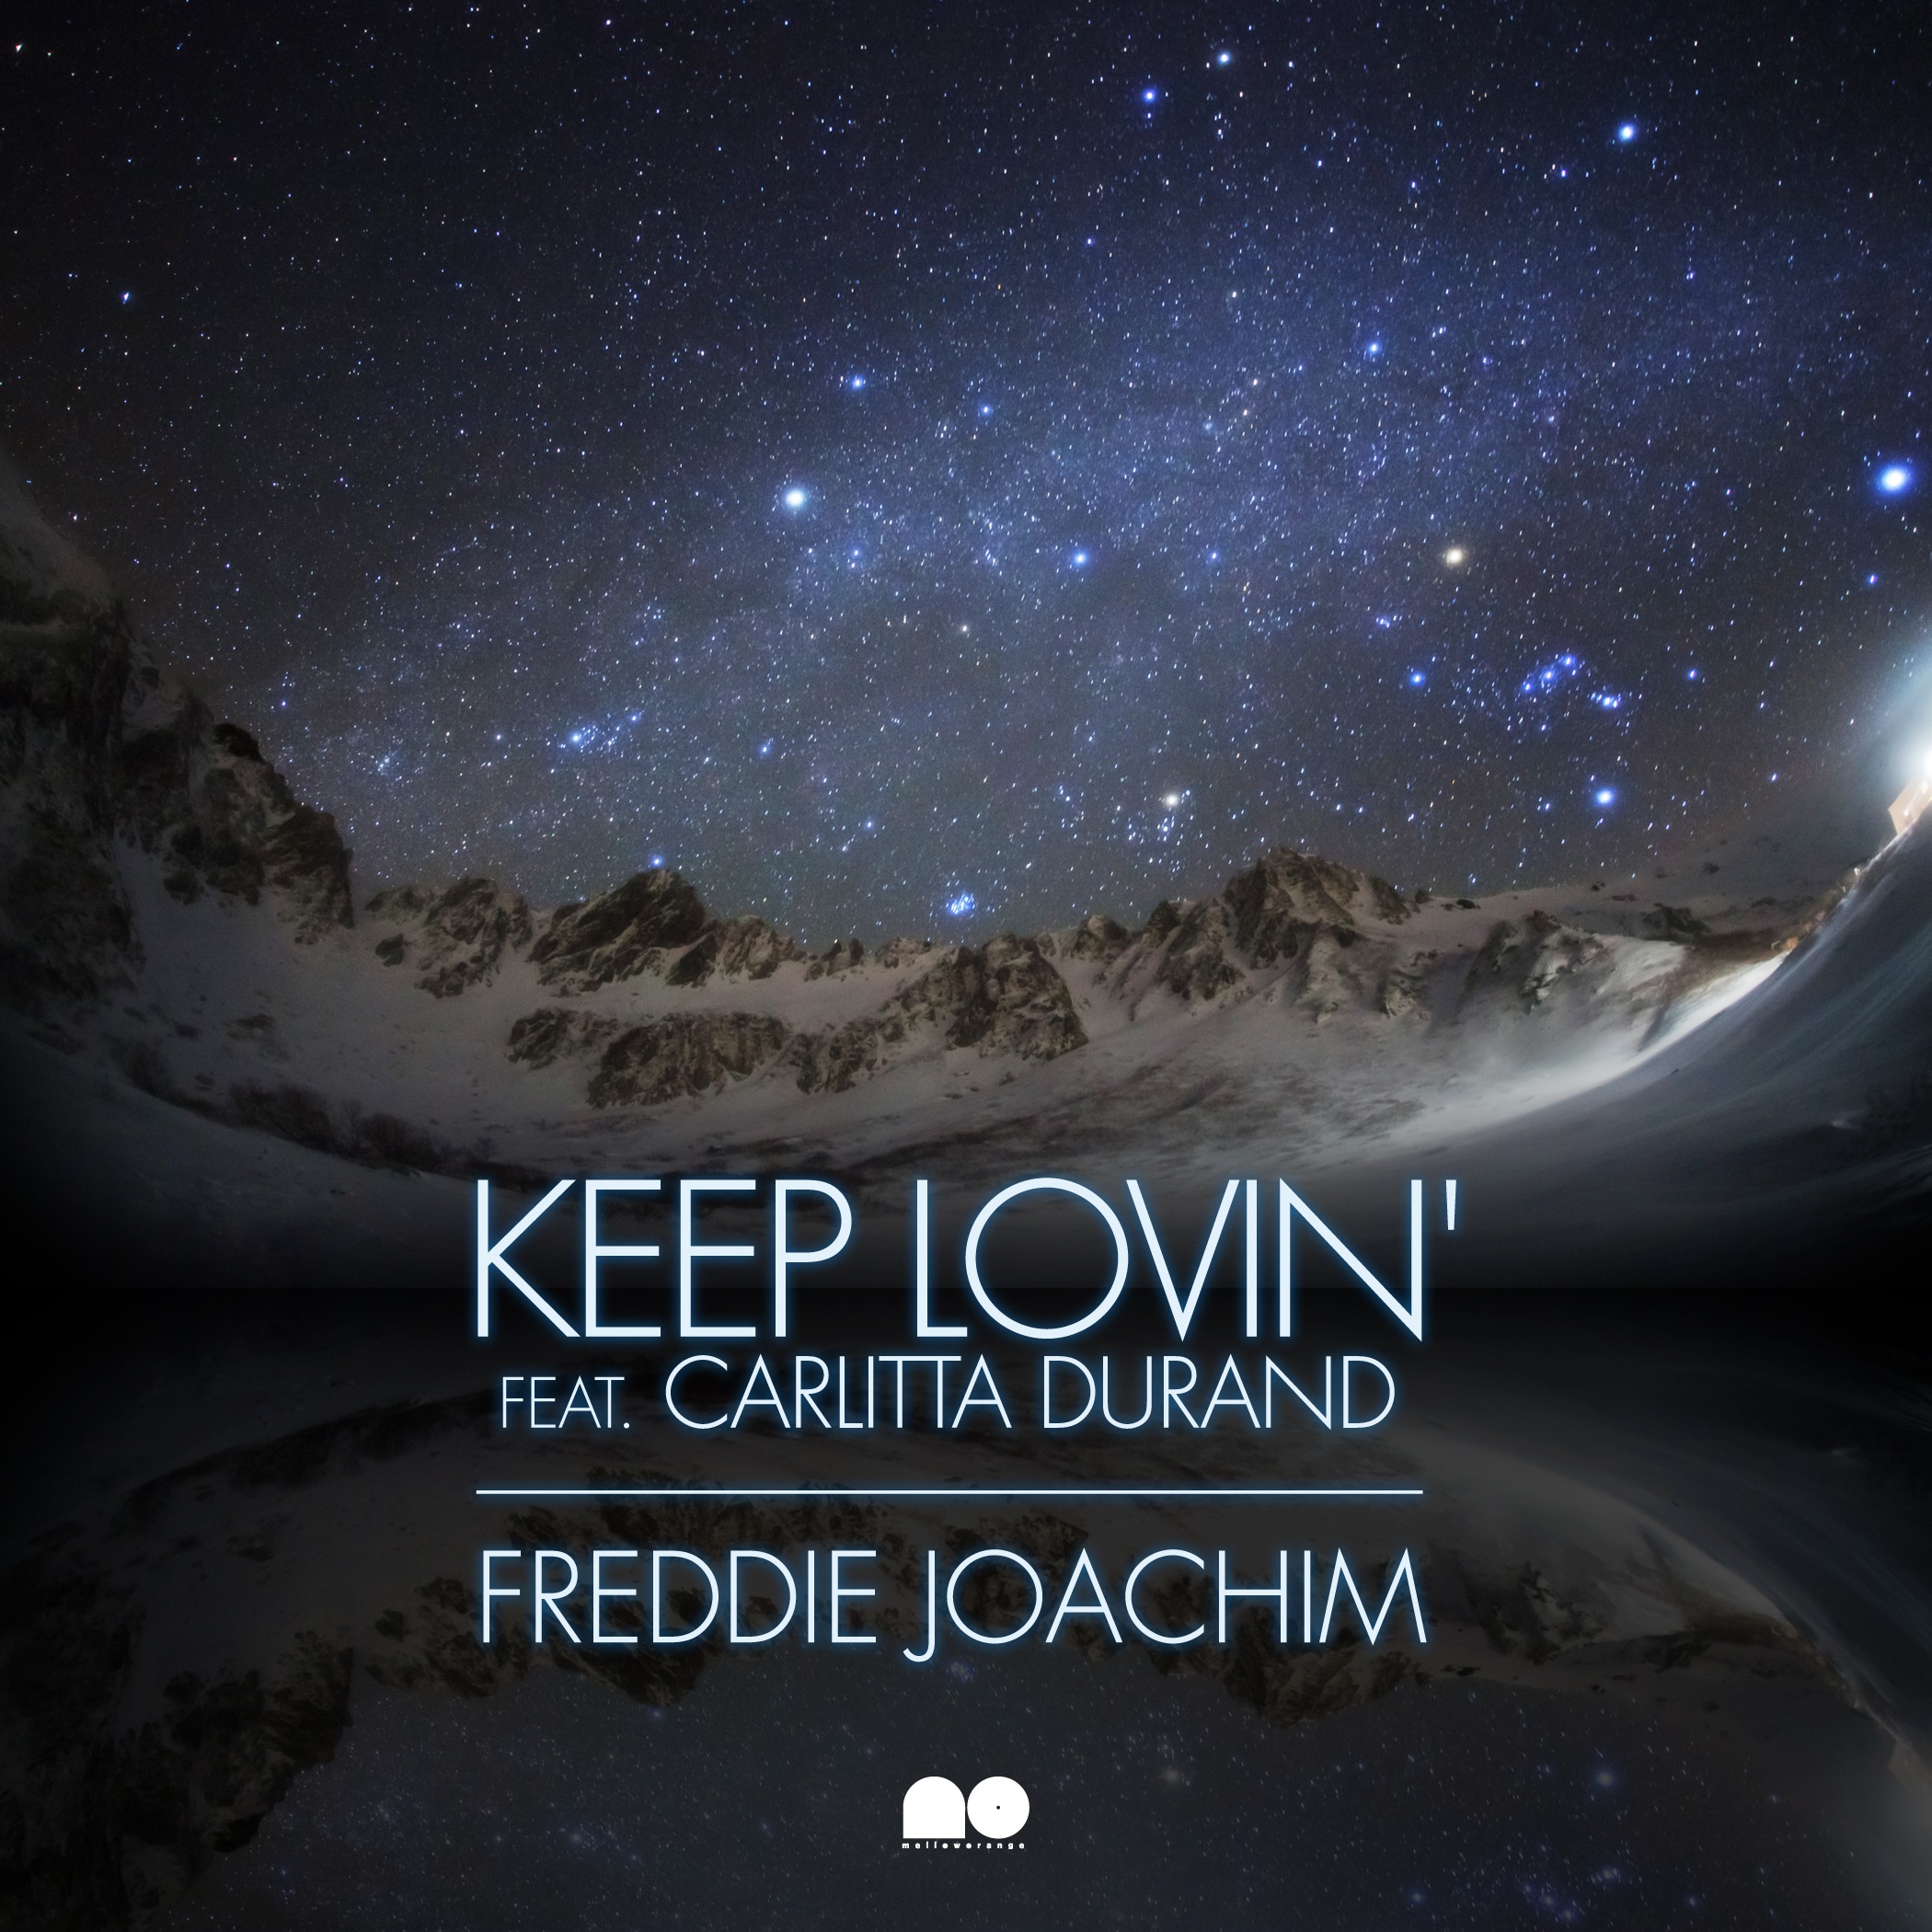 News: Mellow Orange drops new Freddie Joachim single ‘Keep Lovin’